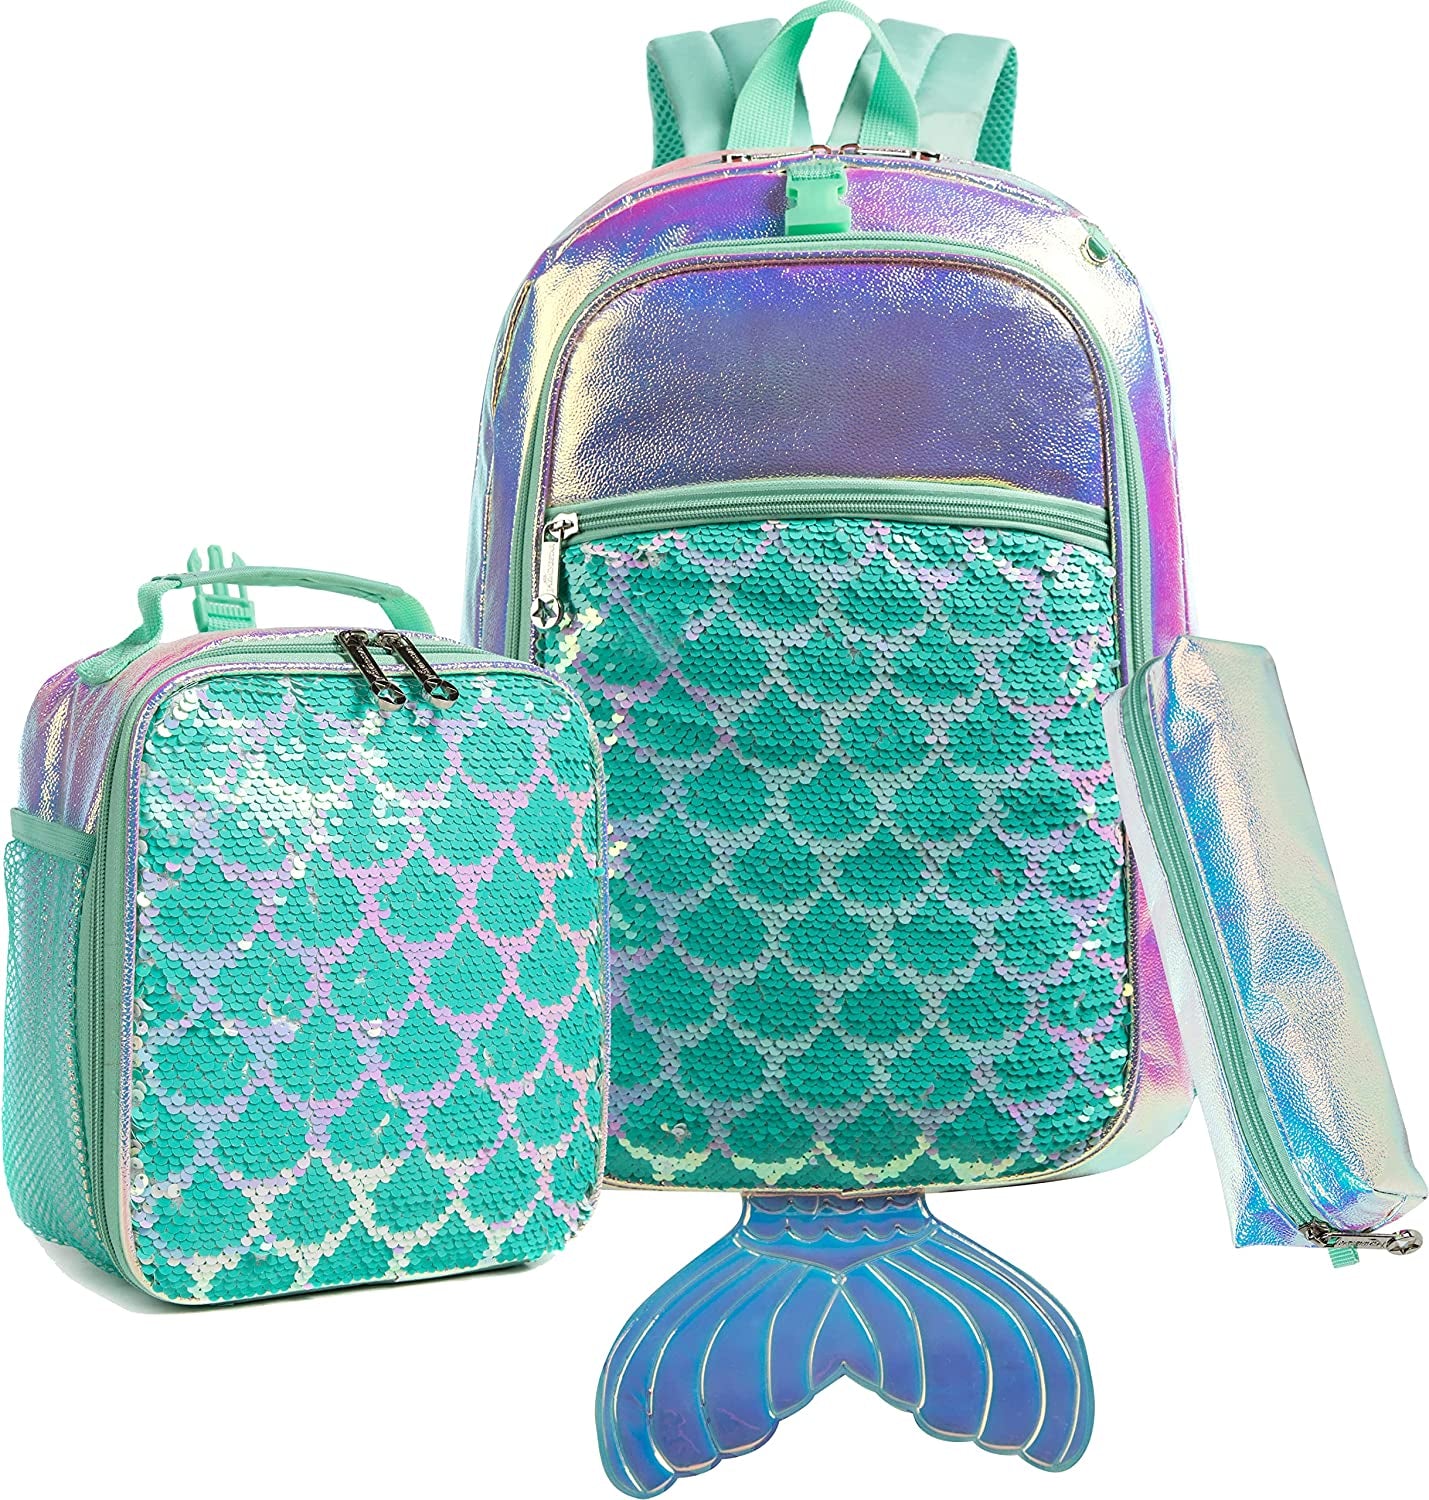 Backpacks for Girls,Kids School Backpacks with Lunch Box for Elementary Preschool Students Cute Panda Sequin Travel Backpack 3 in 1 Bookbag Set for Girls